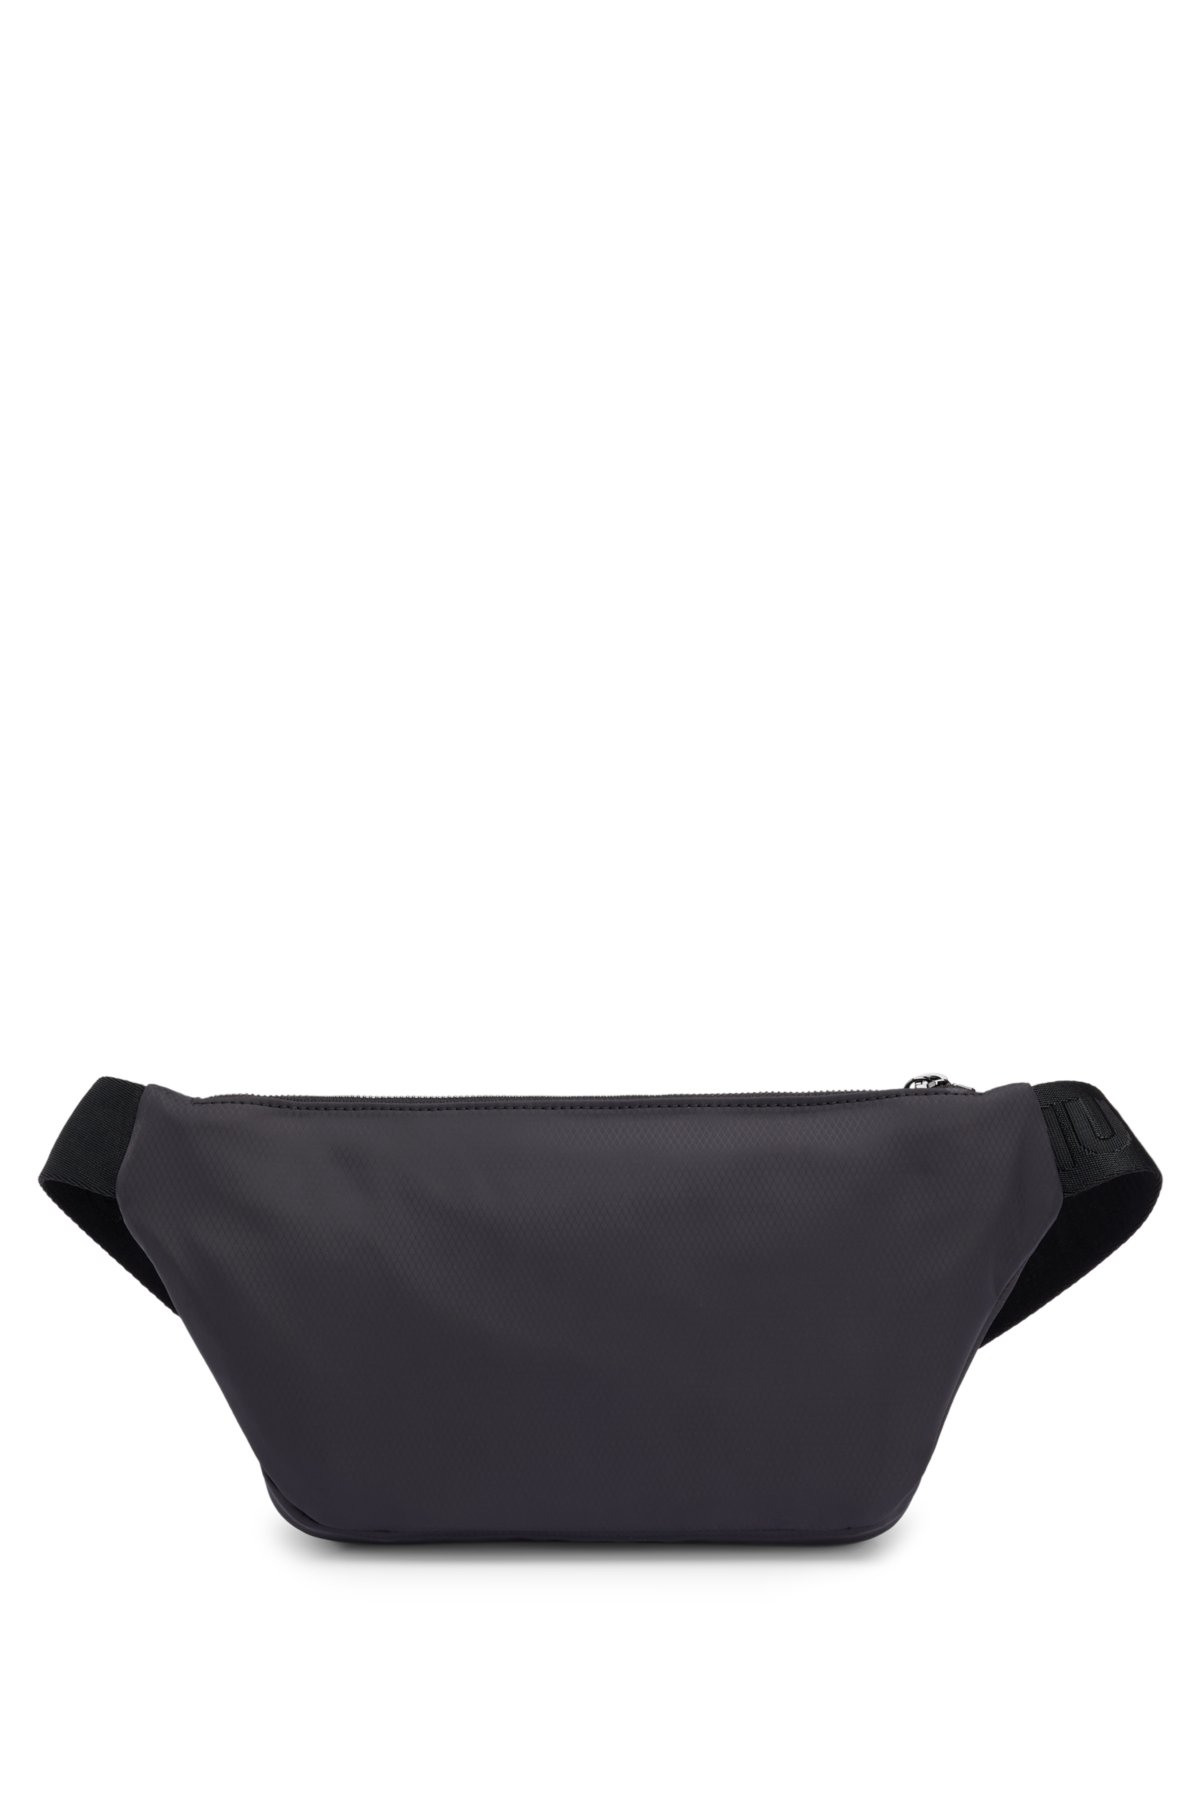 Belt bag with contrast logo and mesh overlay, Black